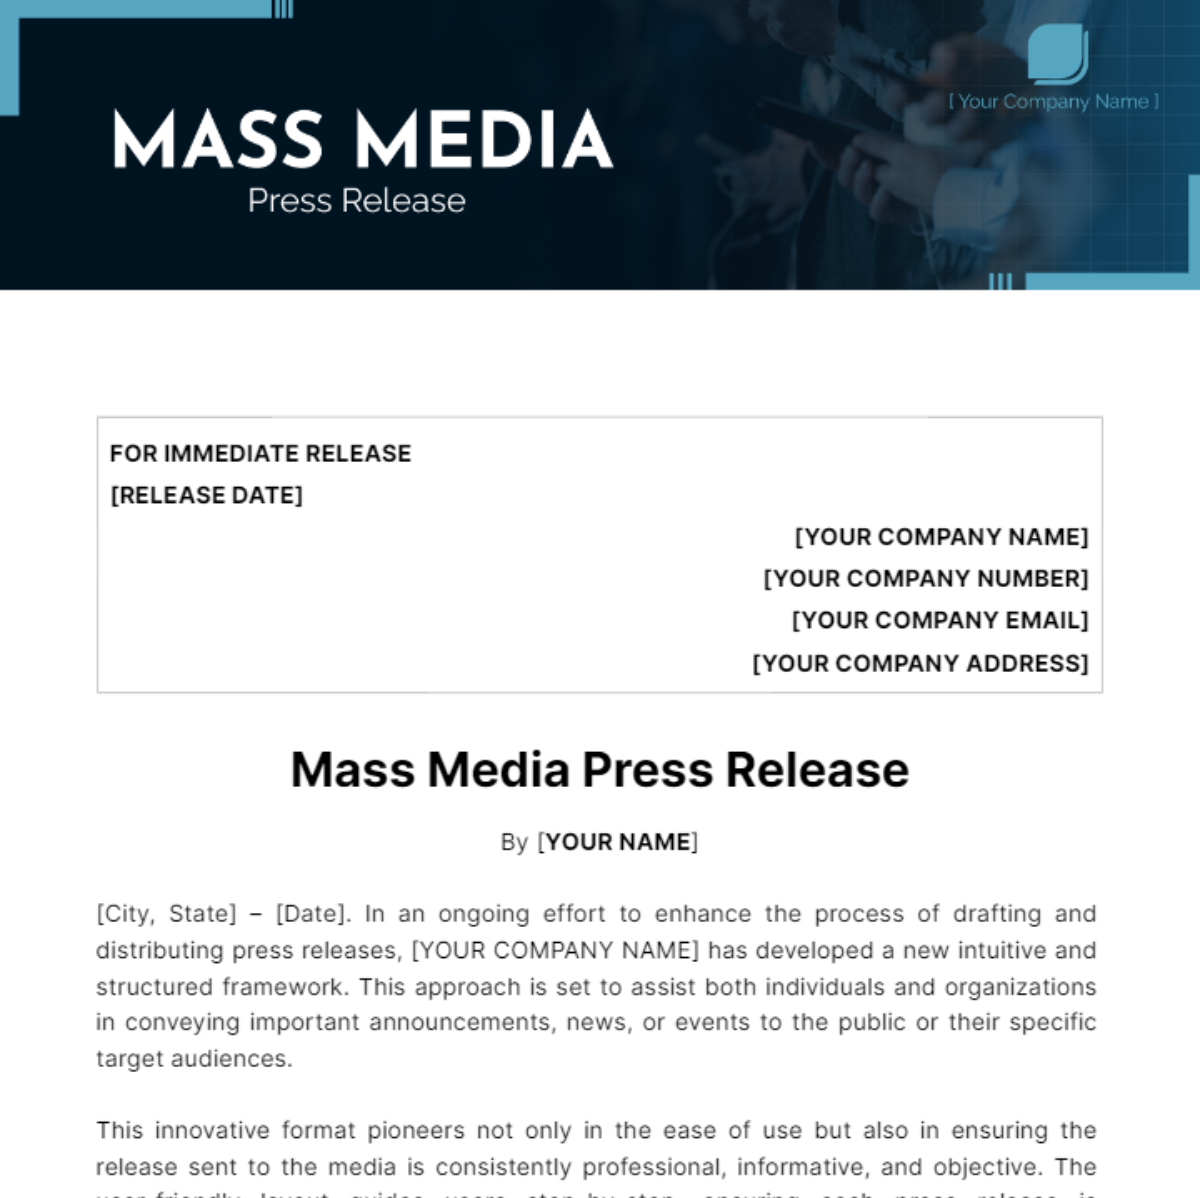 Mass Media Press Release Template